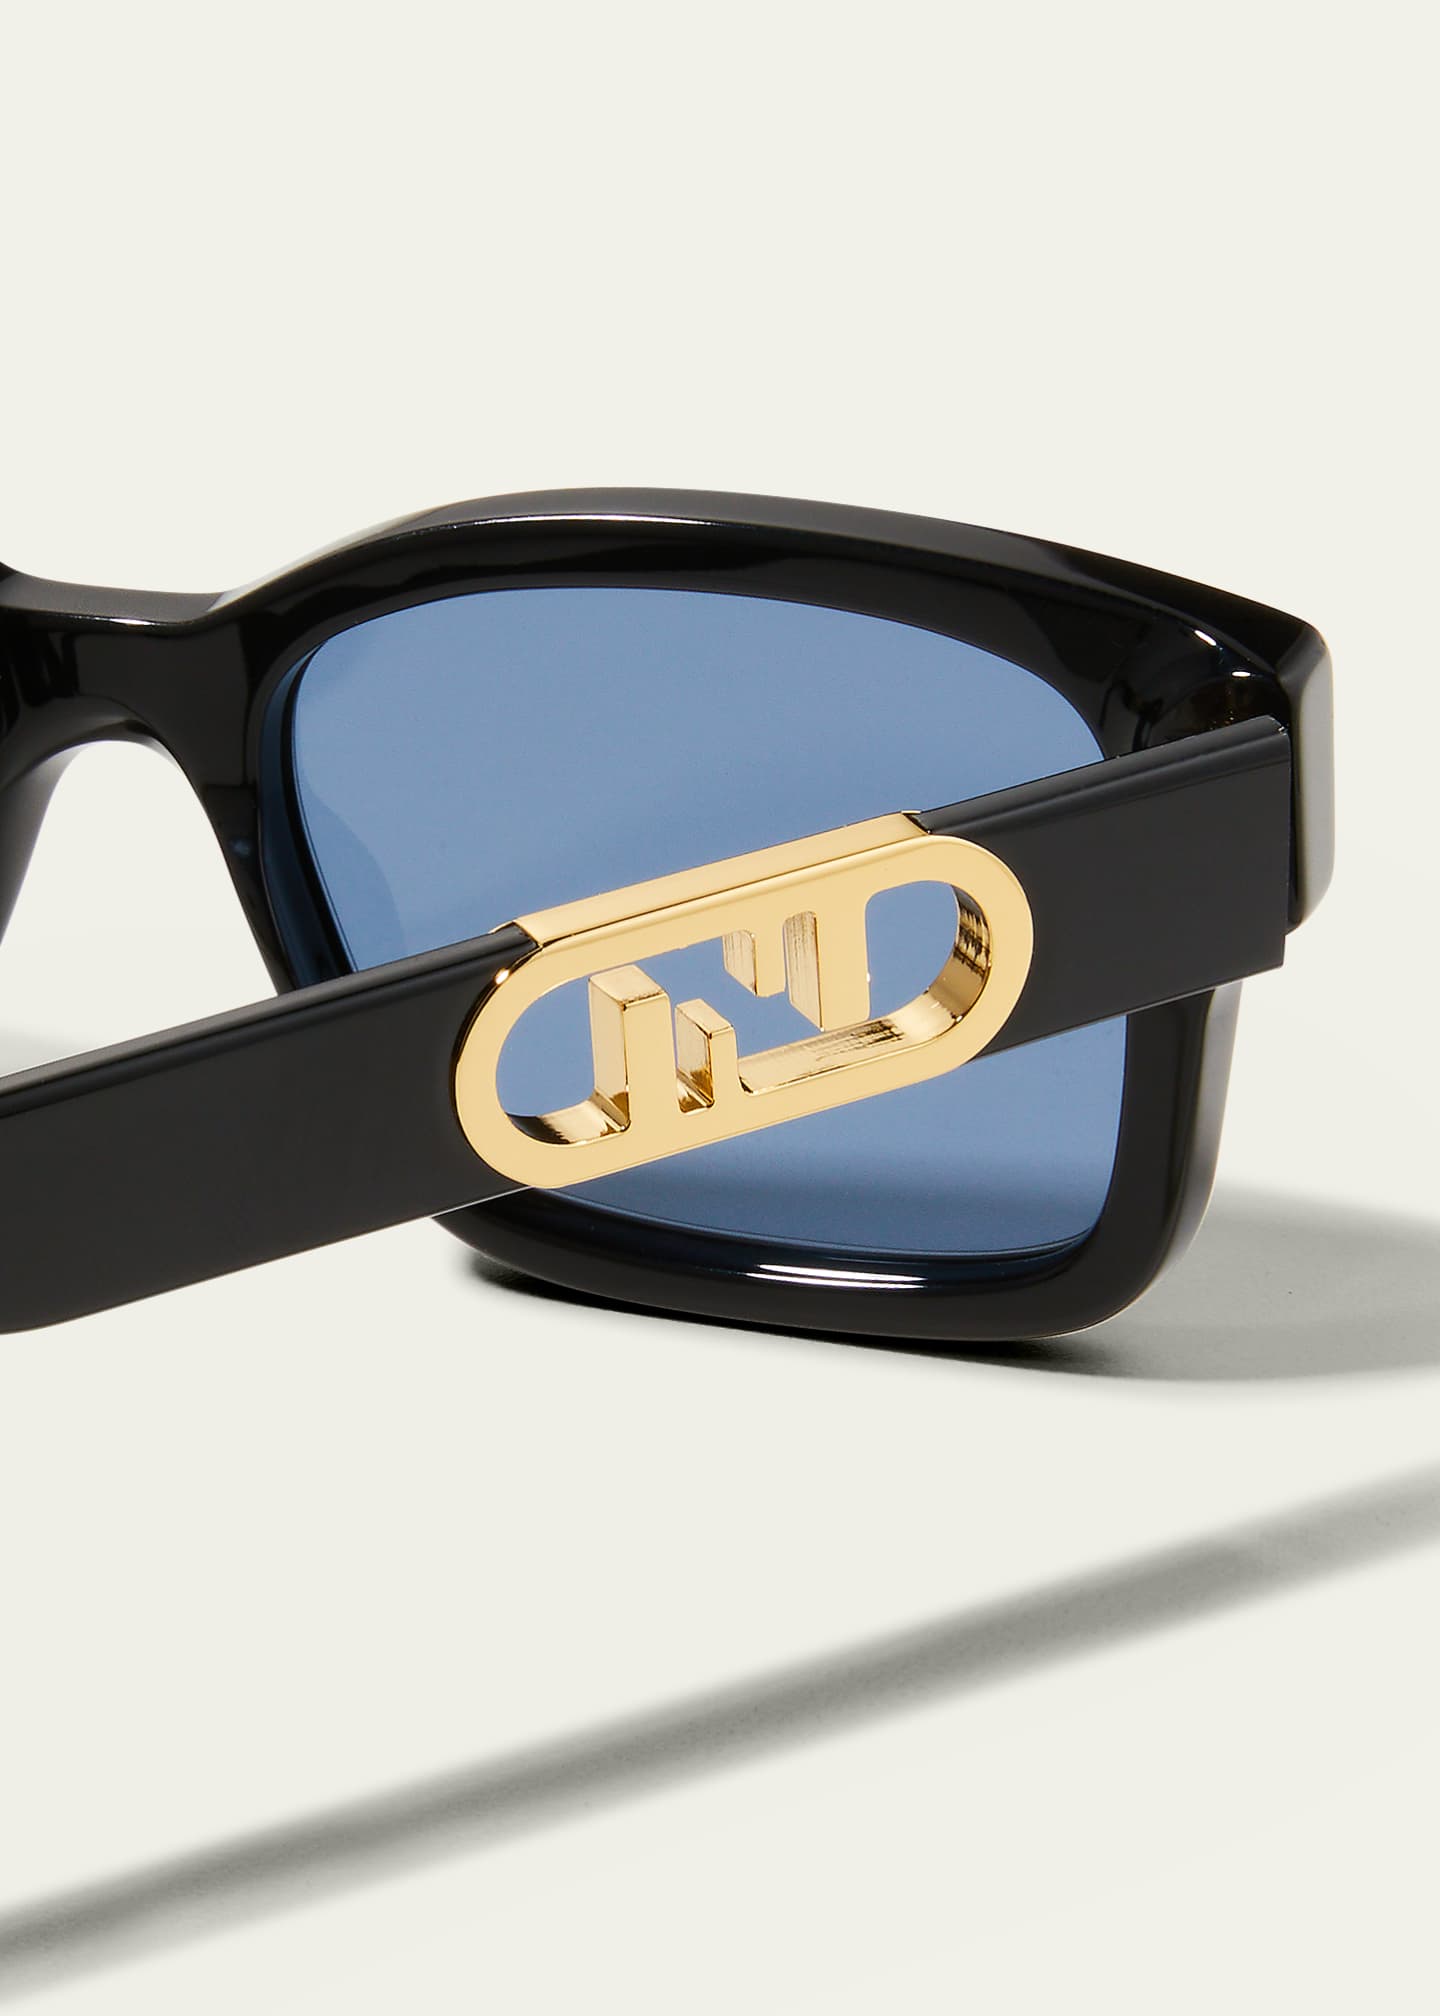 Fendi Men's Raised Logo Rectangle Sunglasses